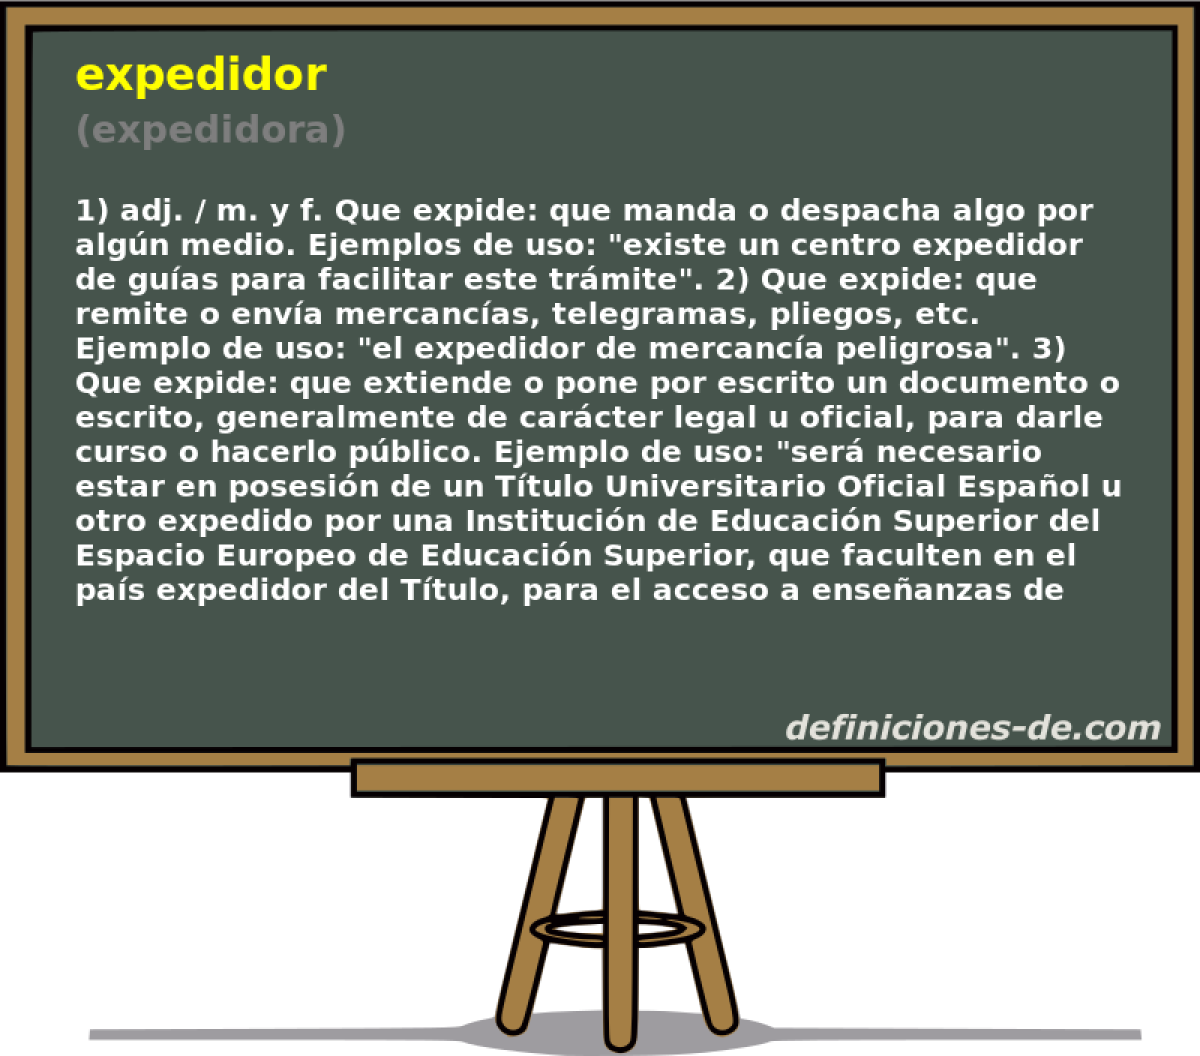 expedidor (expedidora)